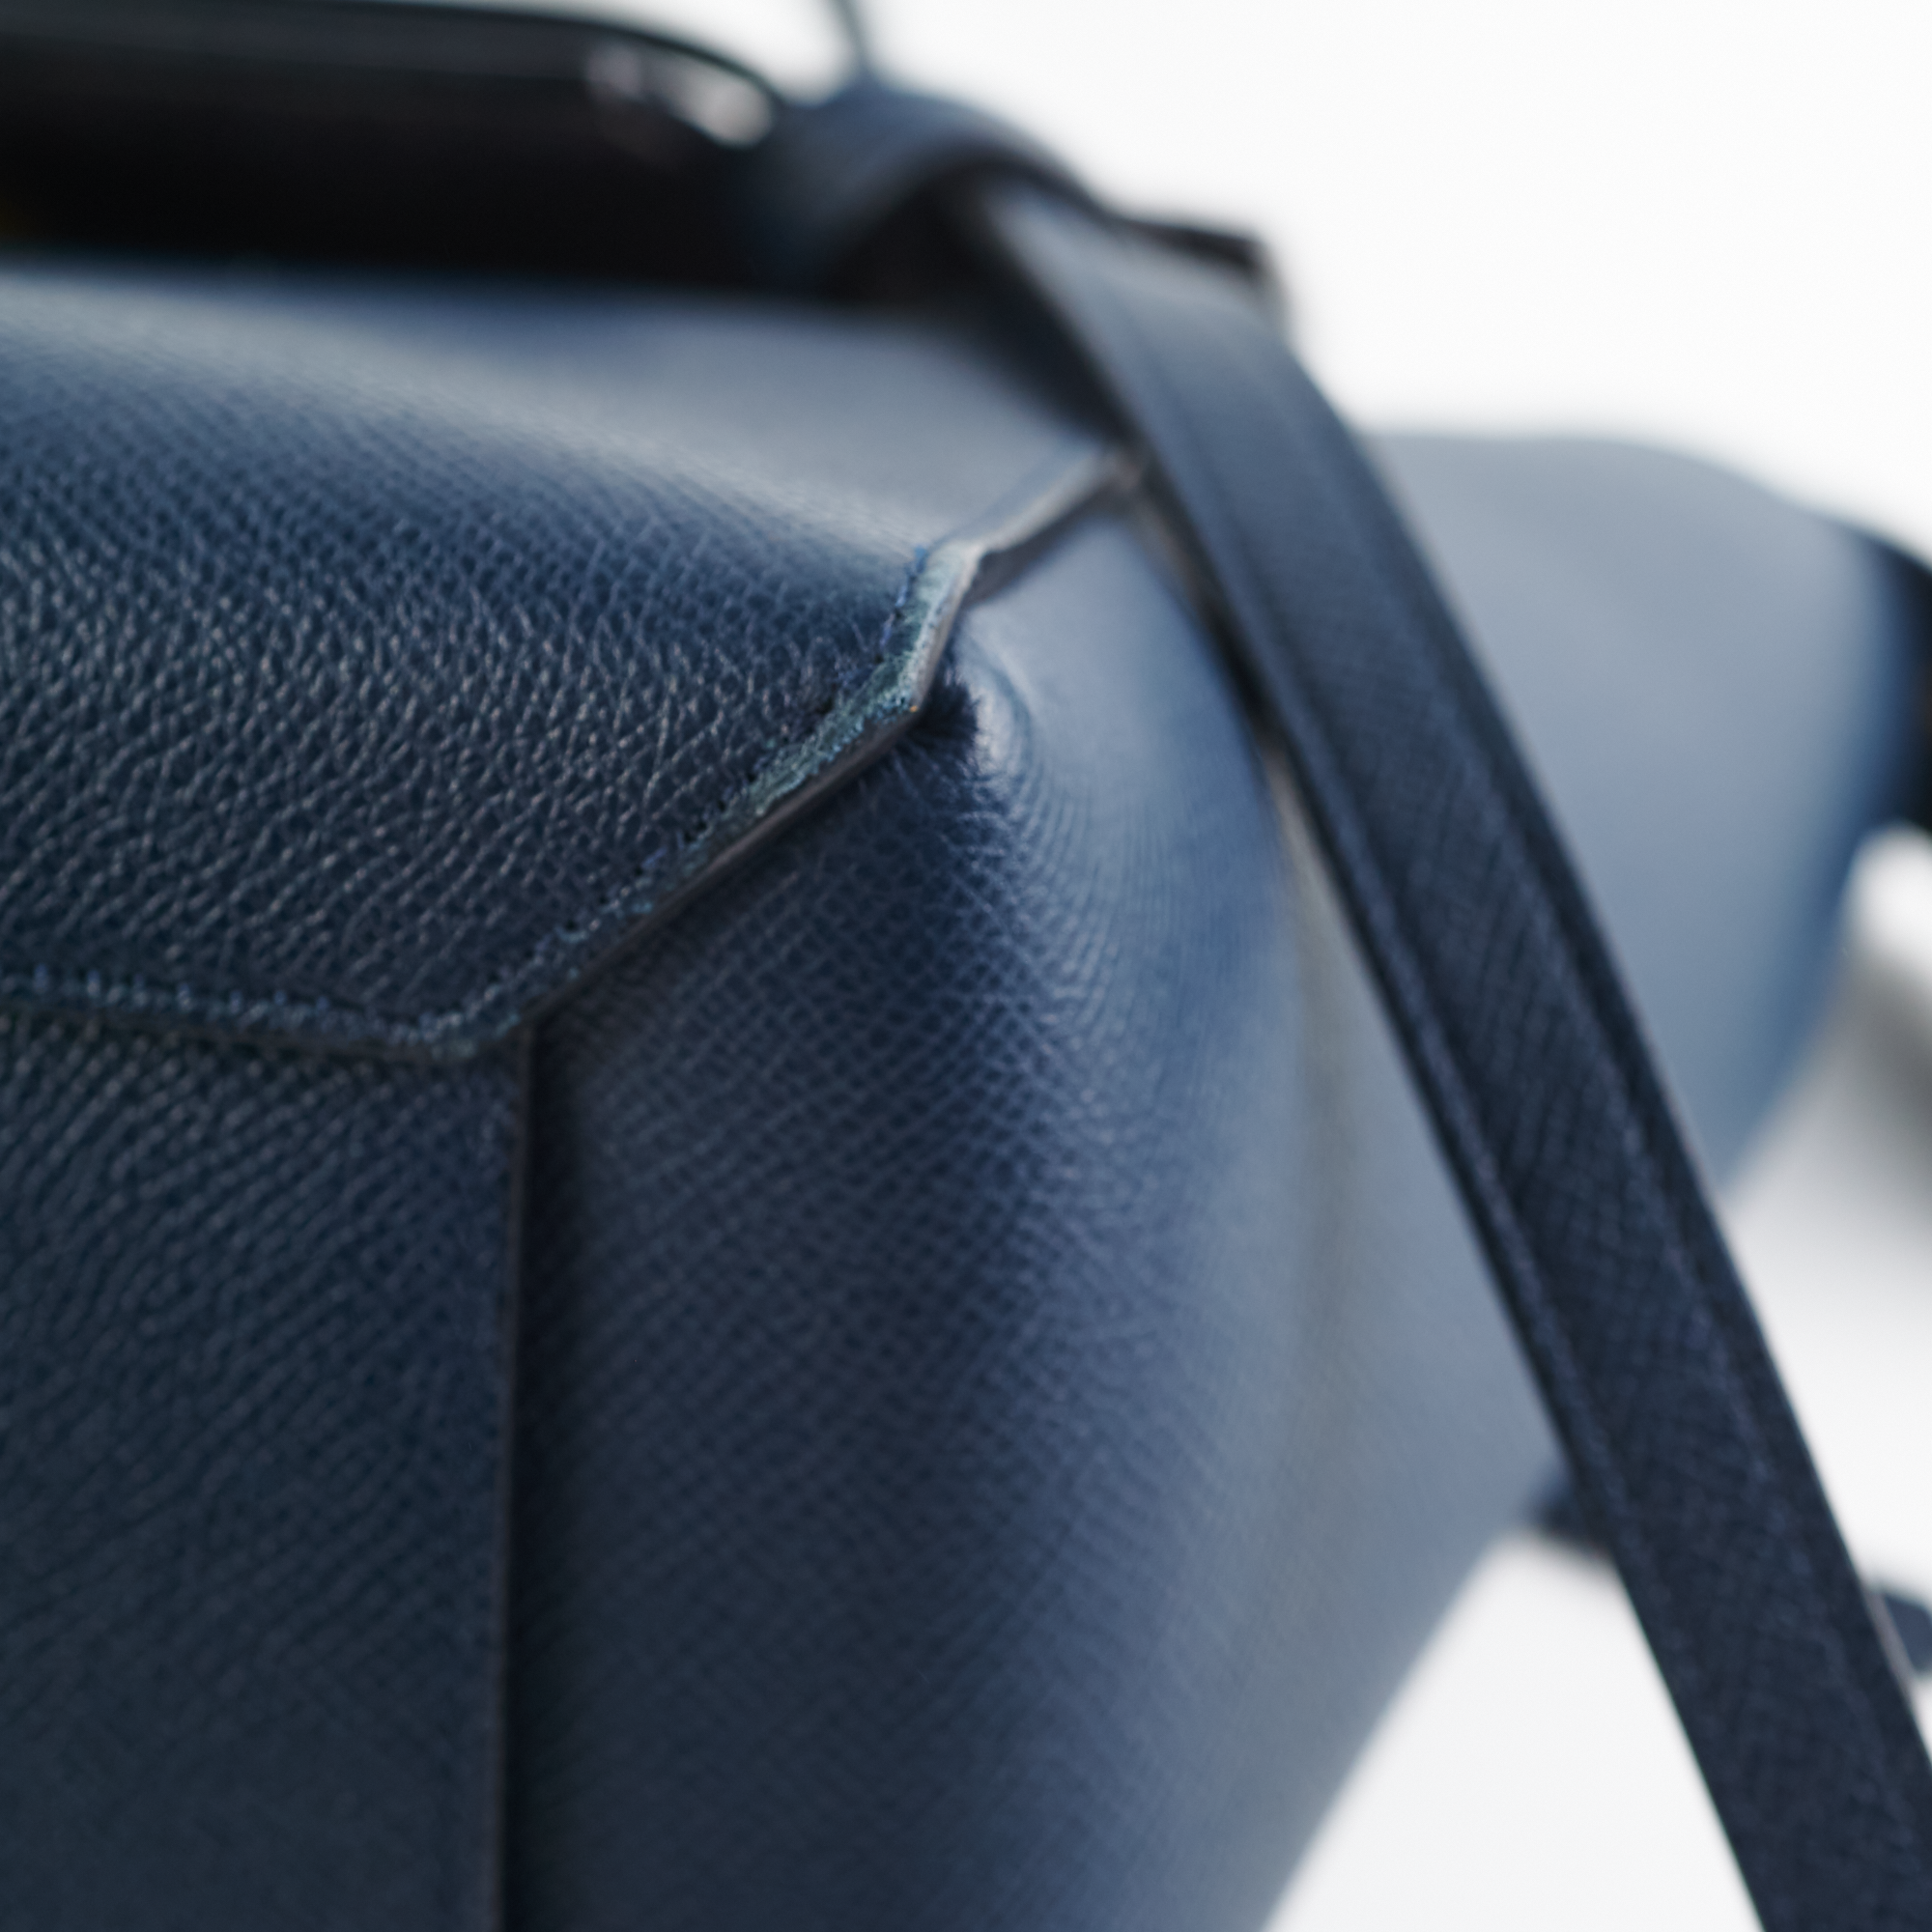 Celine Mini Belt Bag Black - THE PURSE AFFAIR